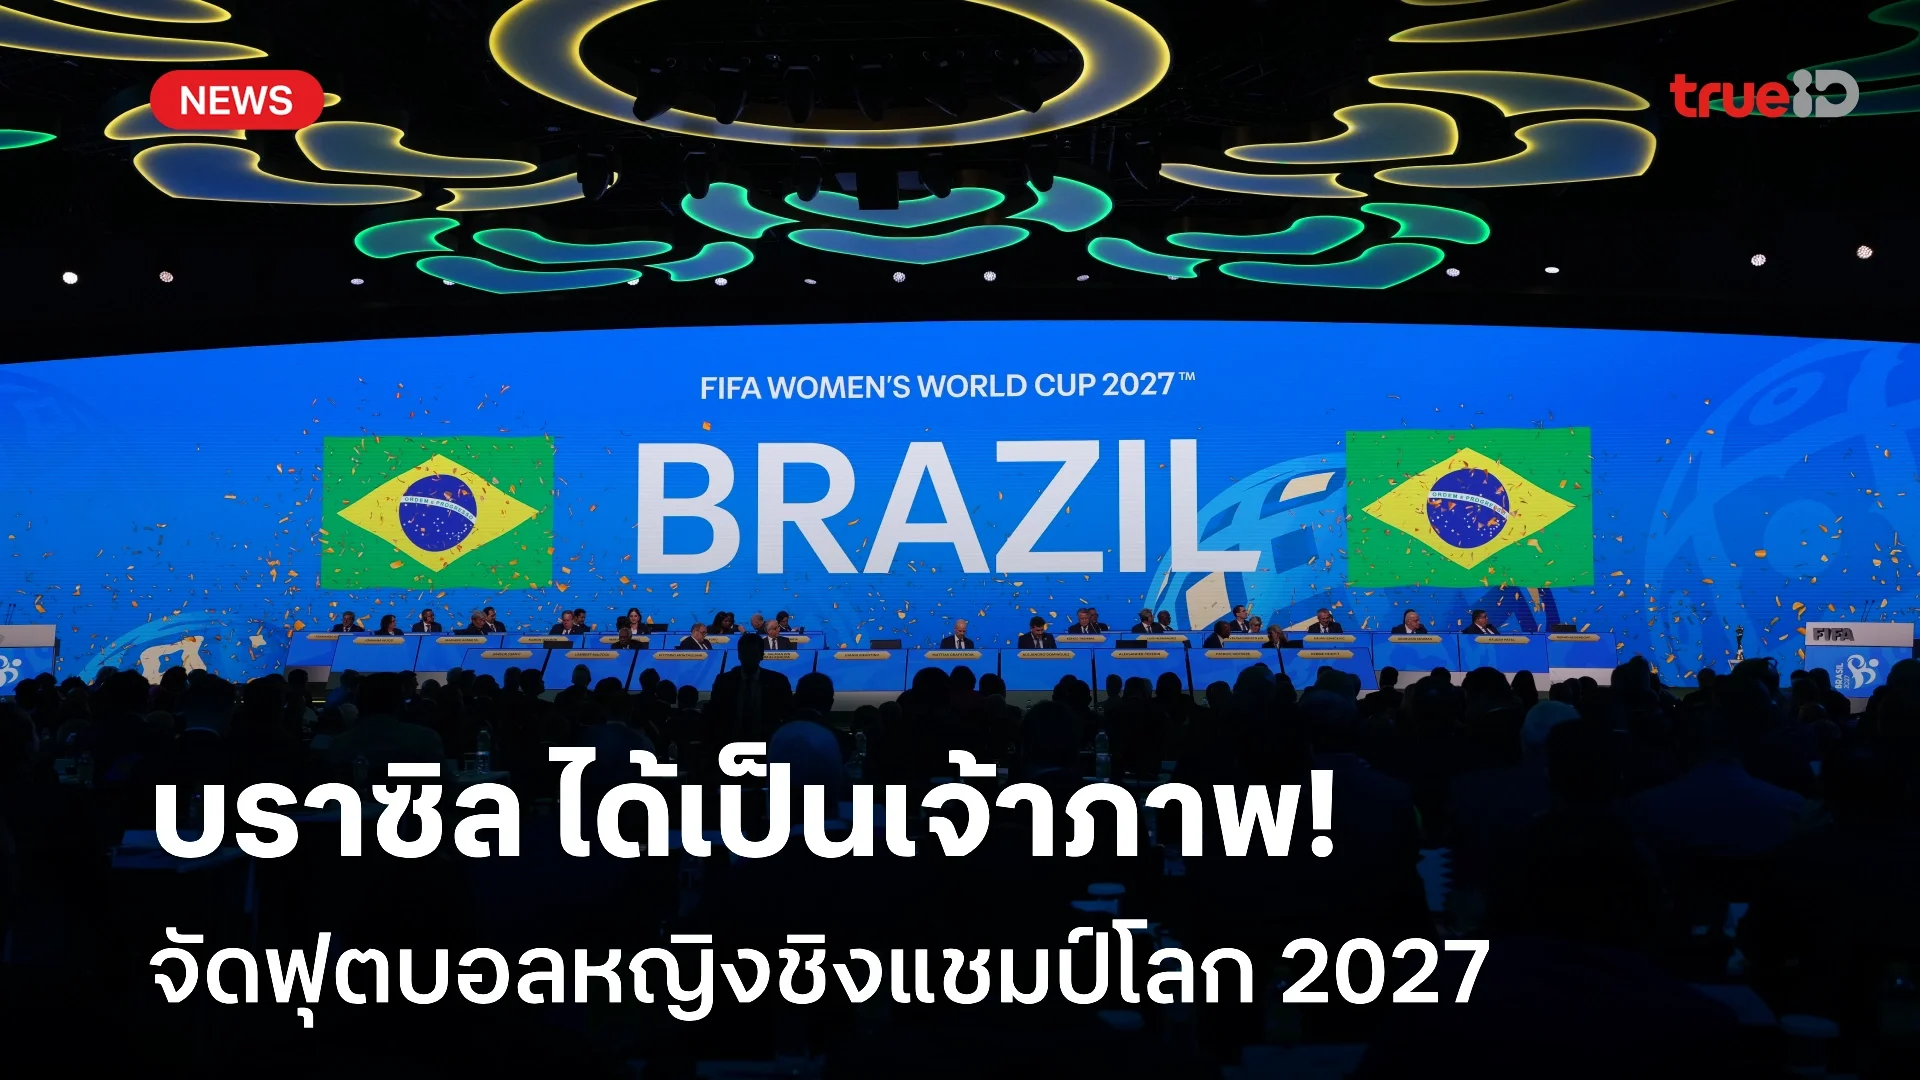 BREAKING : บราซิล ได้รับเลือกเป็นเจ้าภาพ จัดฟุตบอลหญิงชิงแชมป์โลก 2027